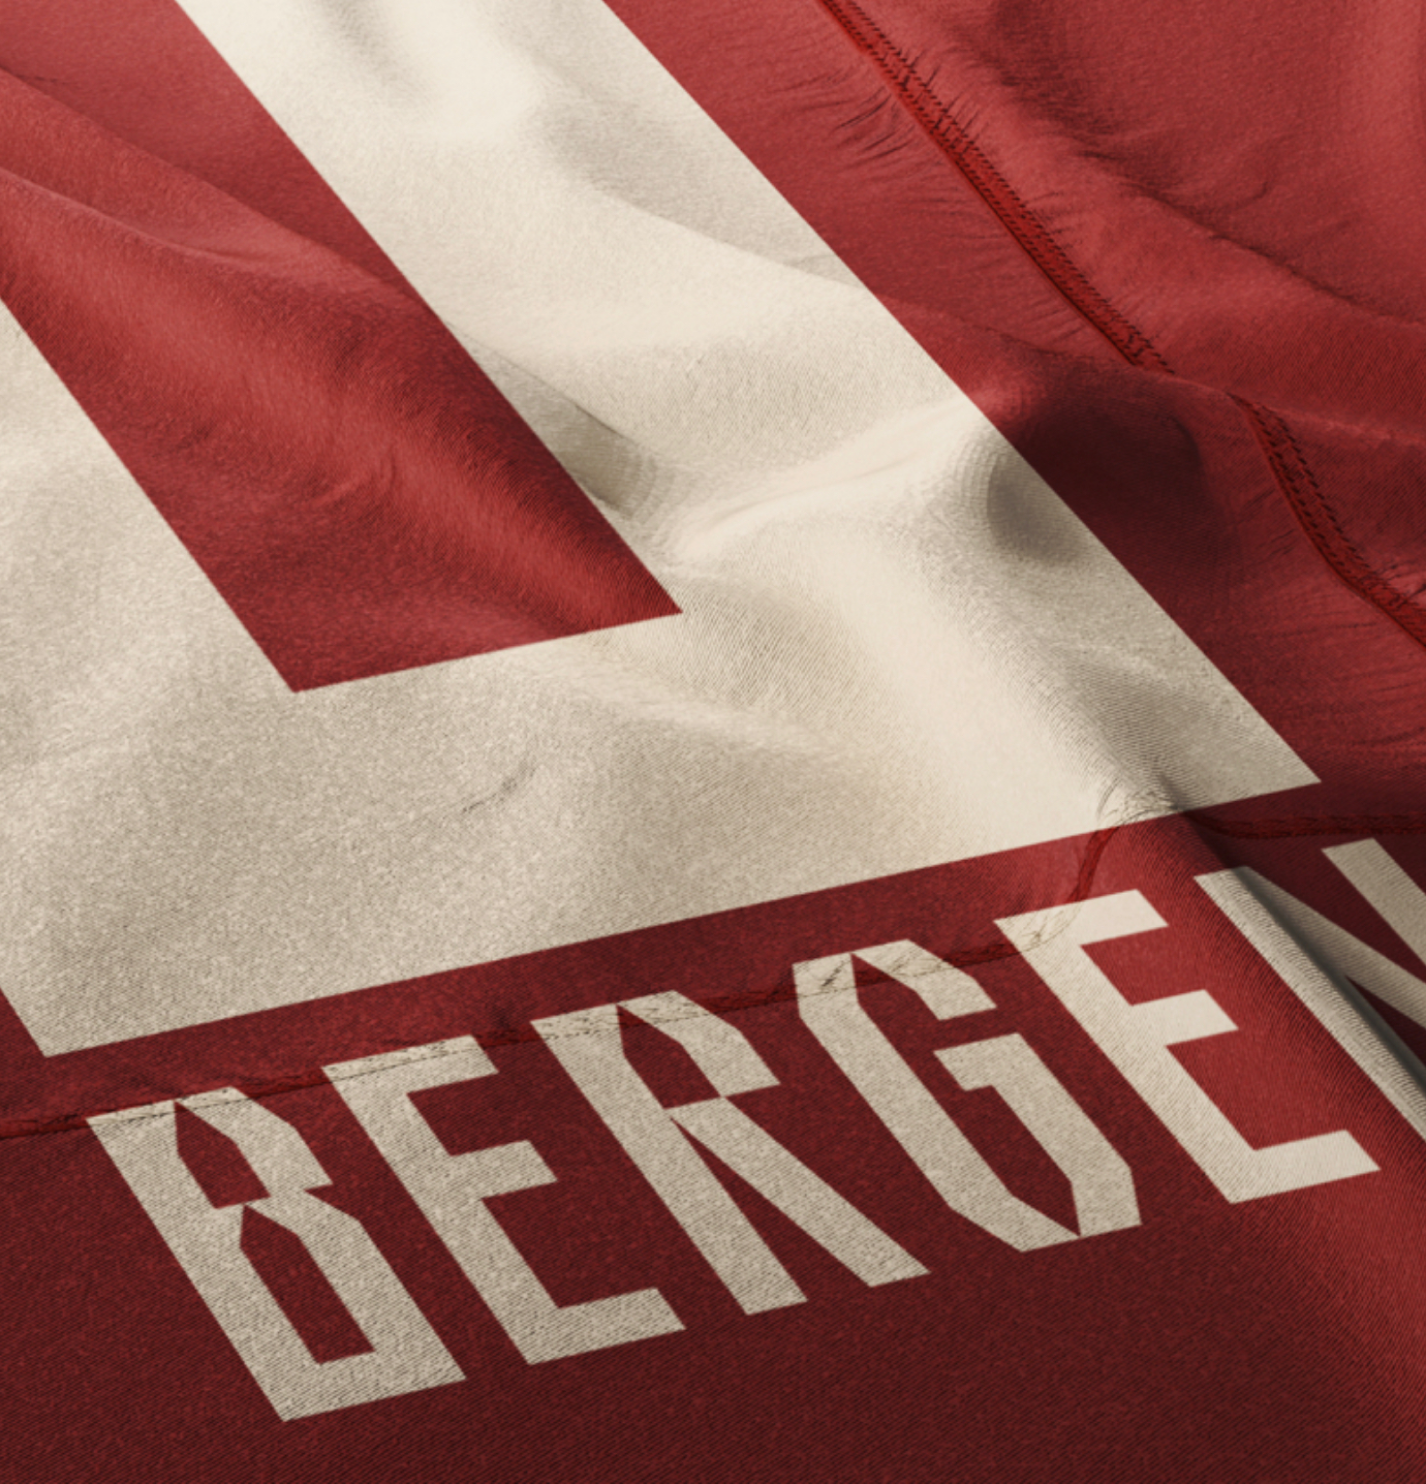 Bergen flag detail